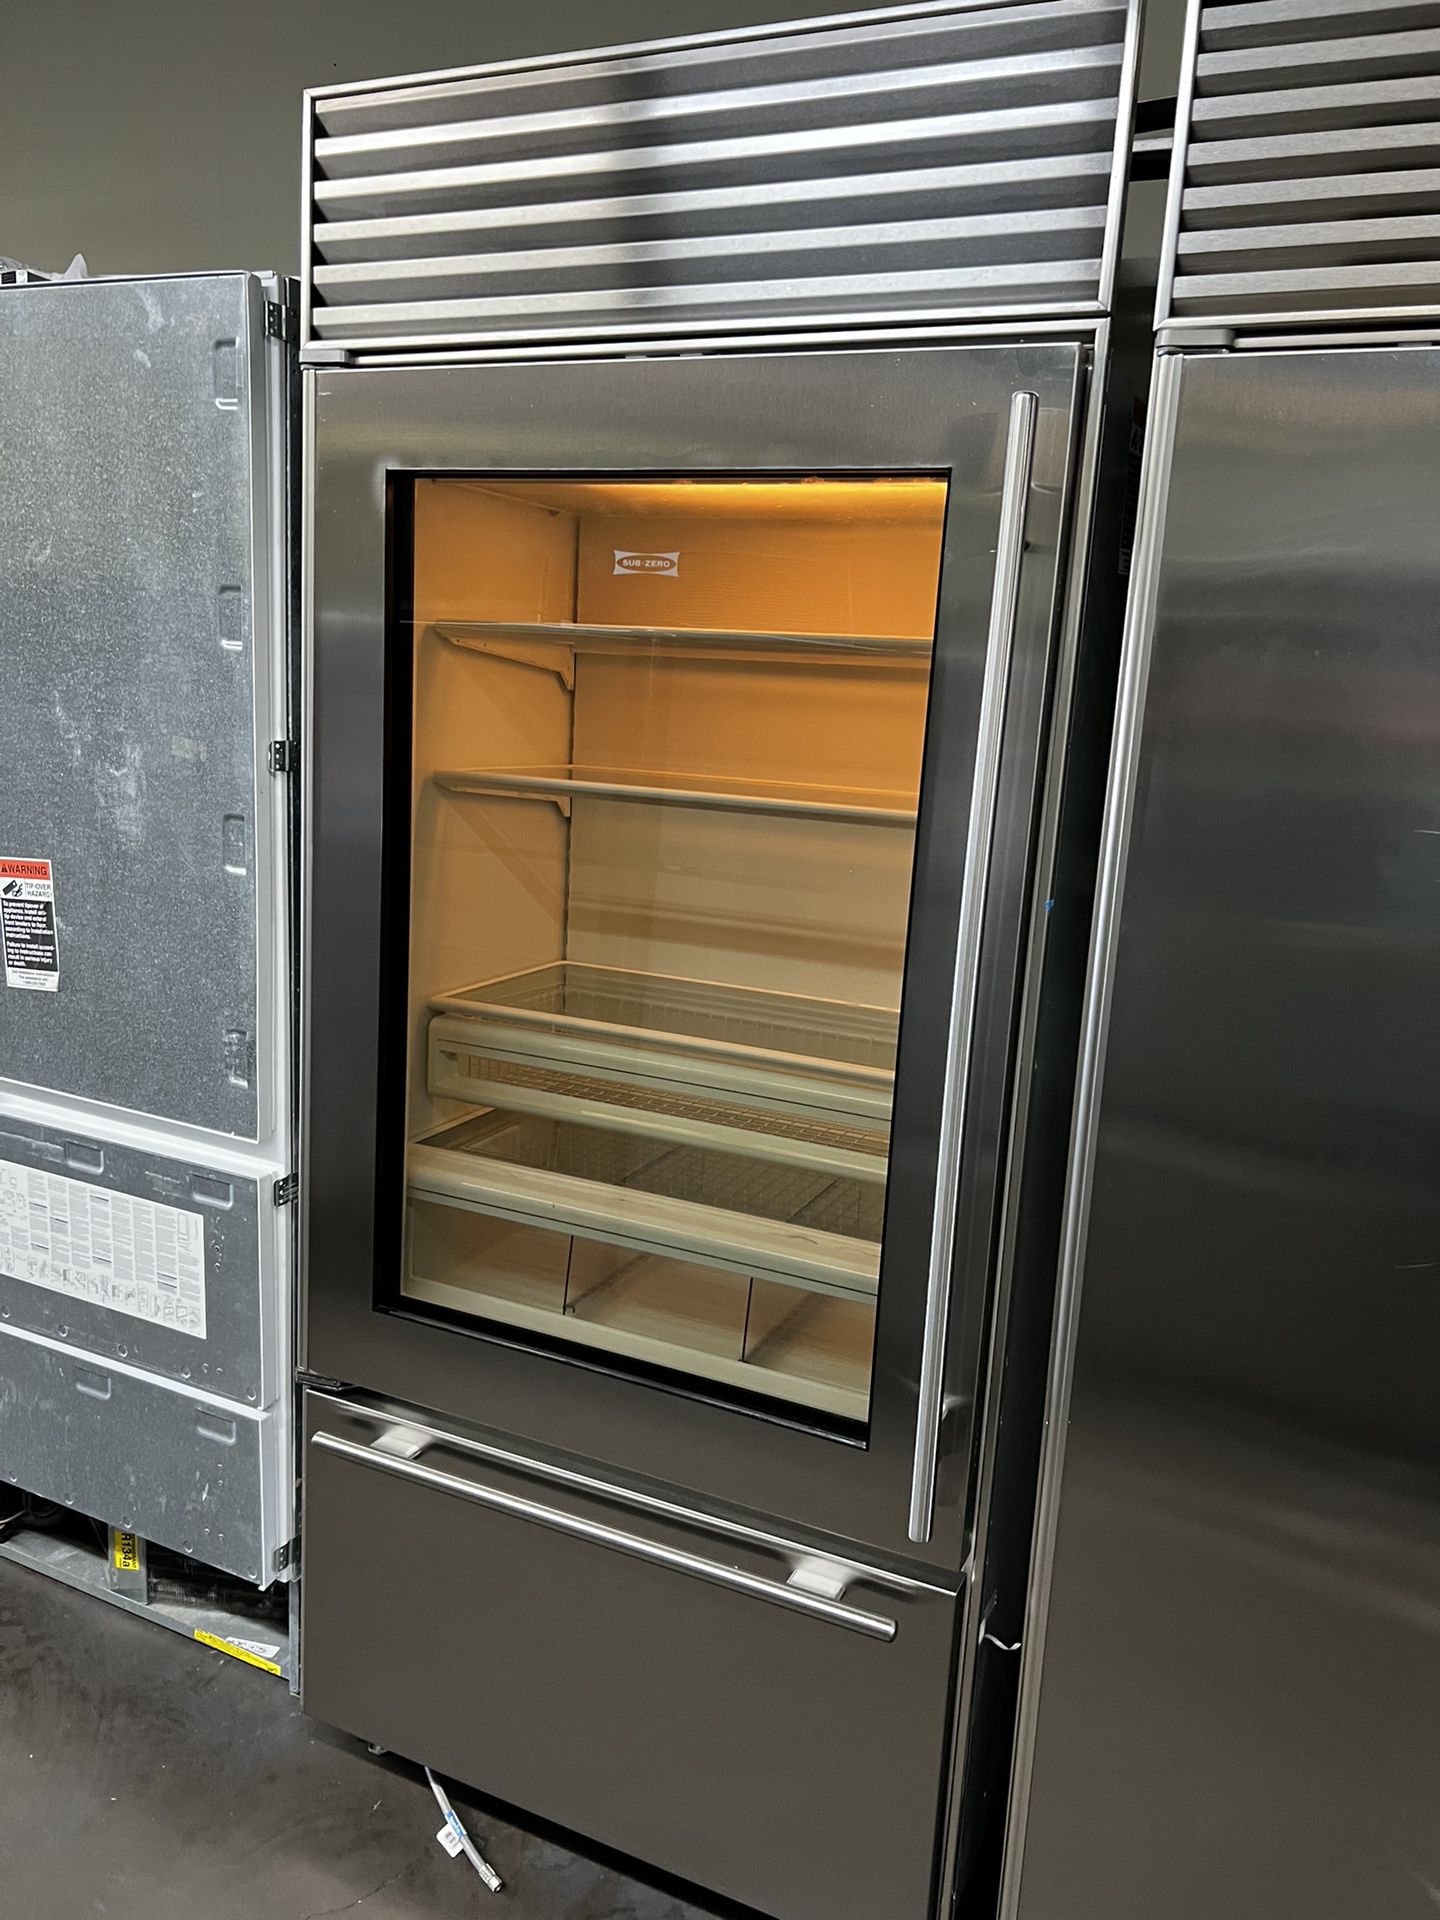 Sub Zero 36”Wide Bottom Freezer Built In Refrigerator With Glass View